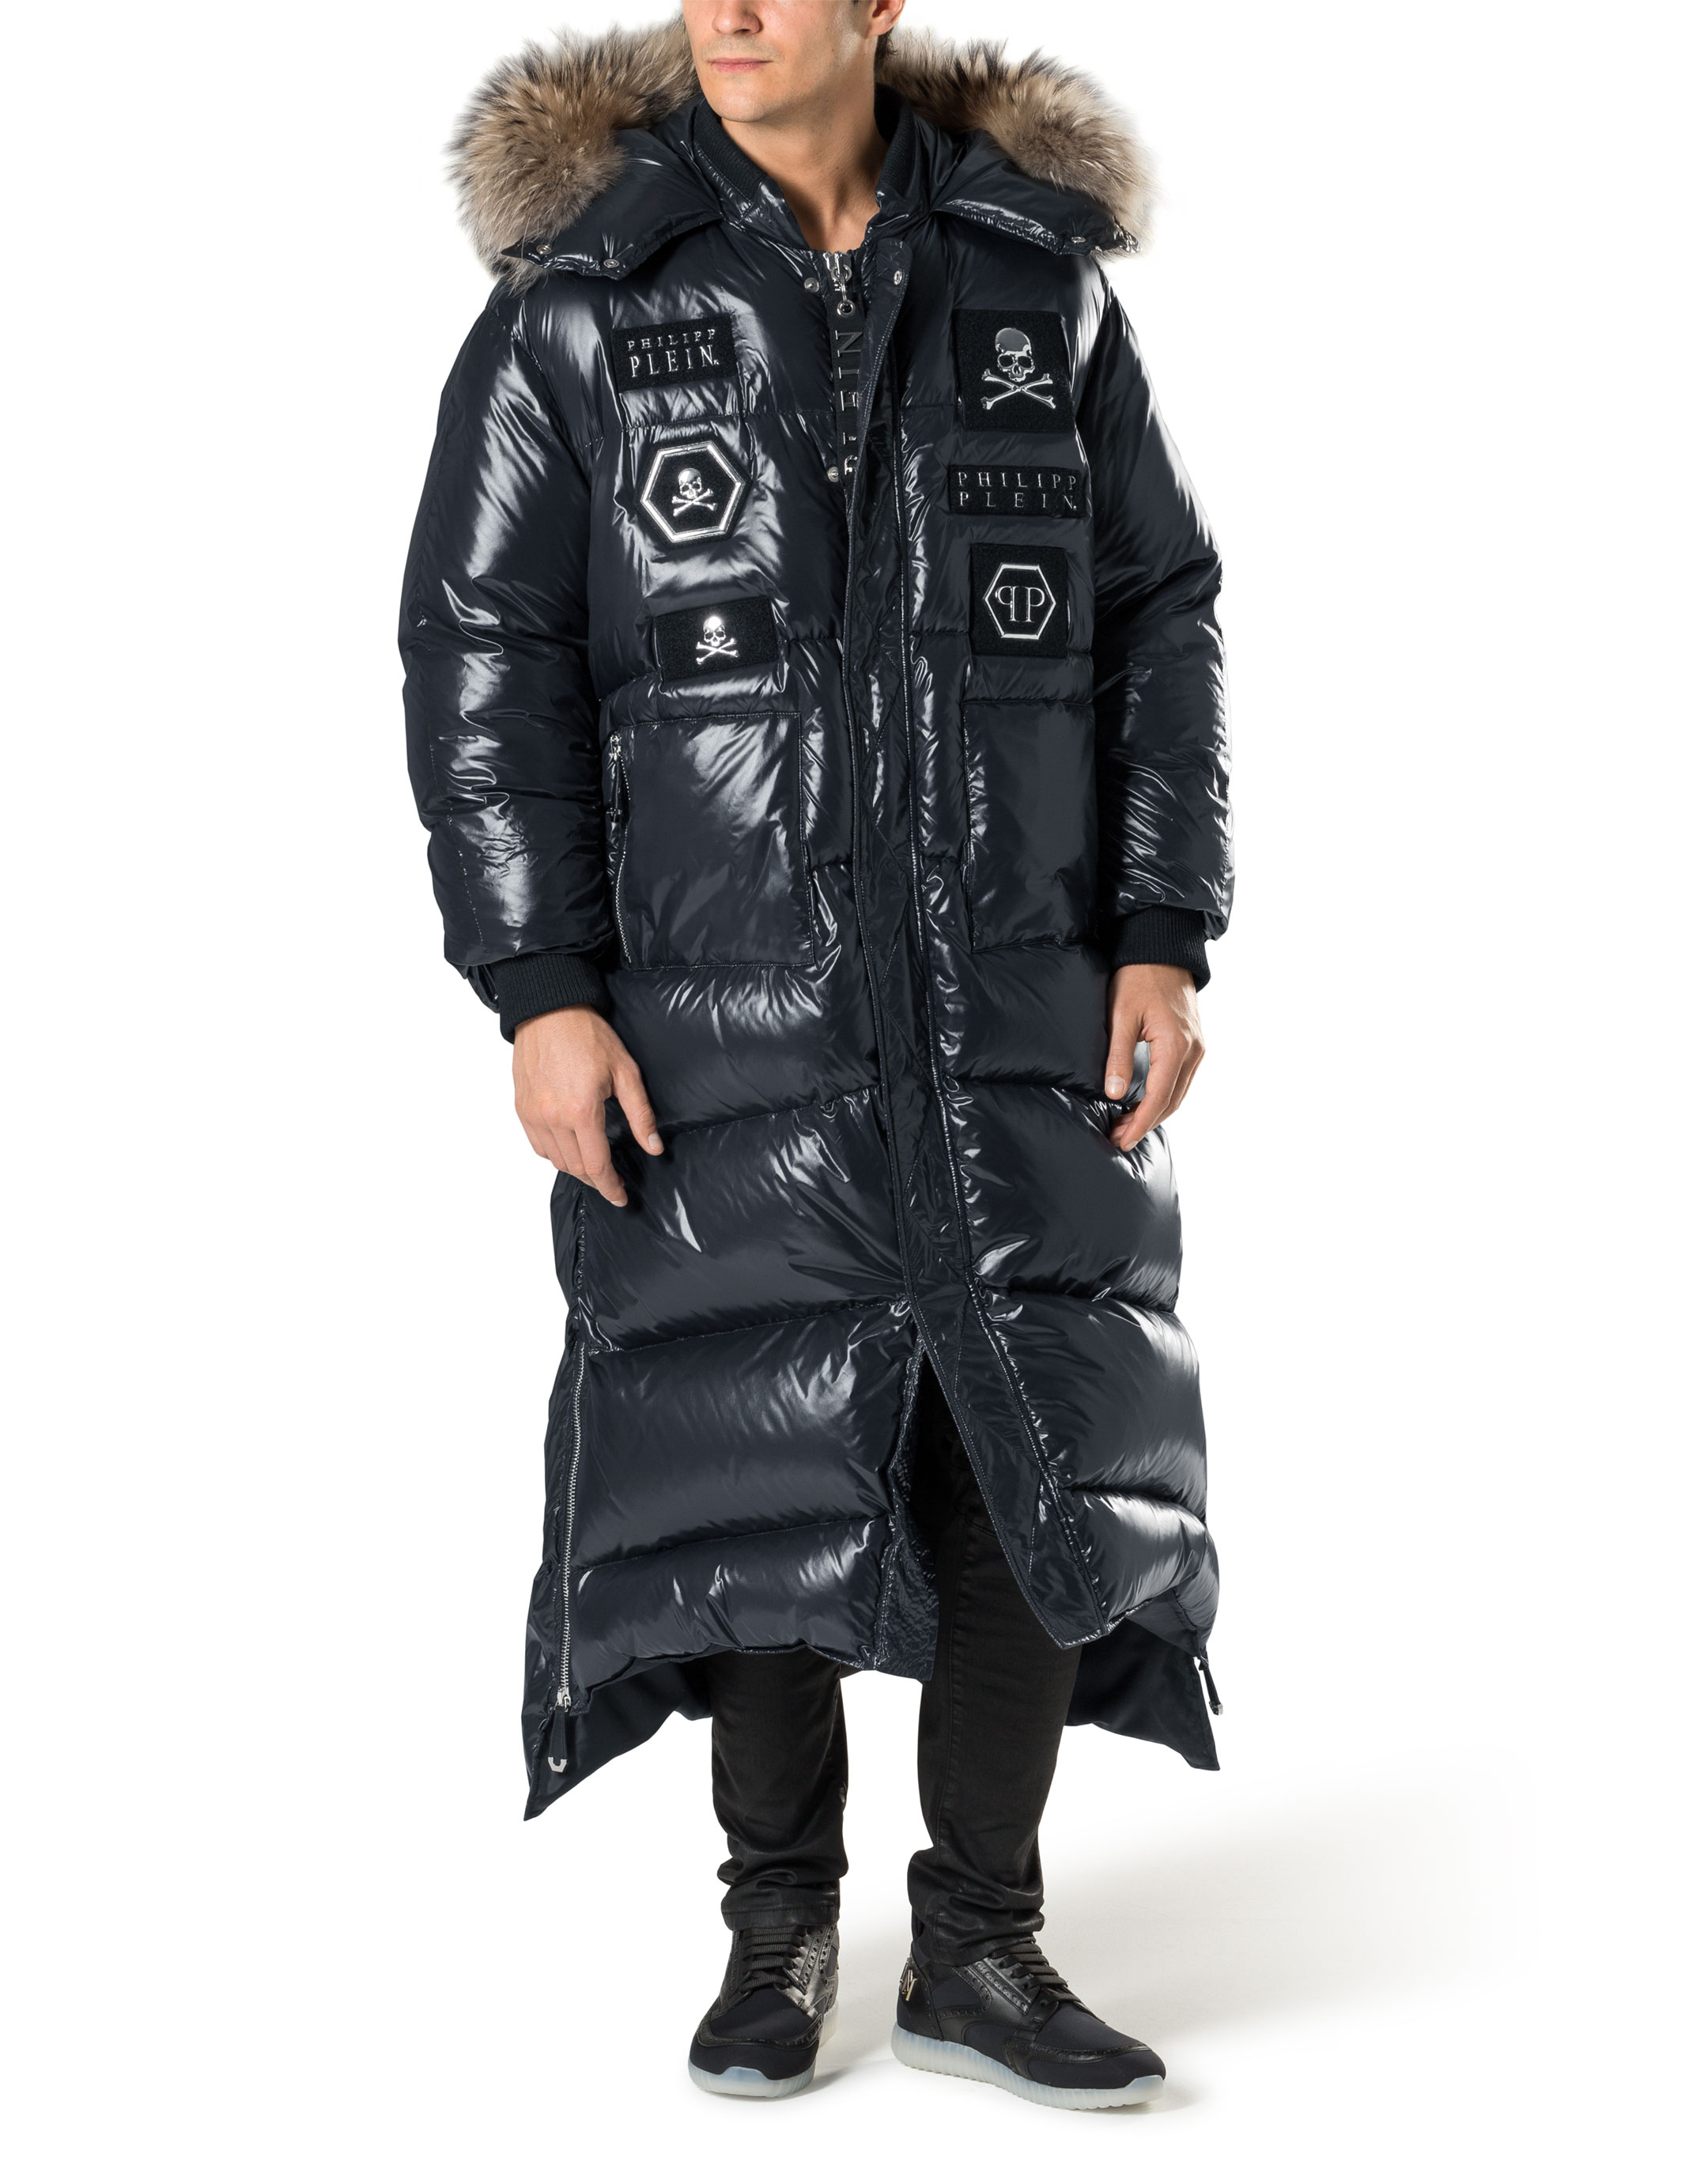 Philipp Plein Men's Winter Jacket on Sale, 58% OFF | www.colegiogamarra.com